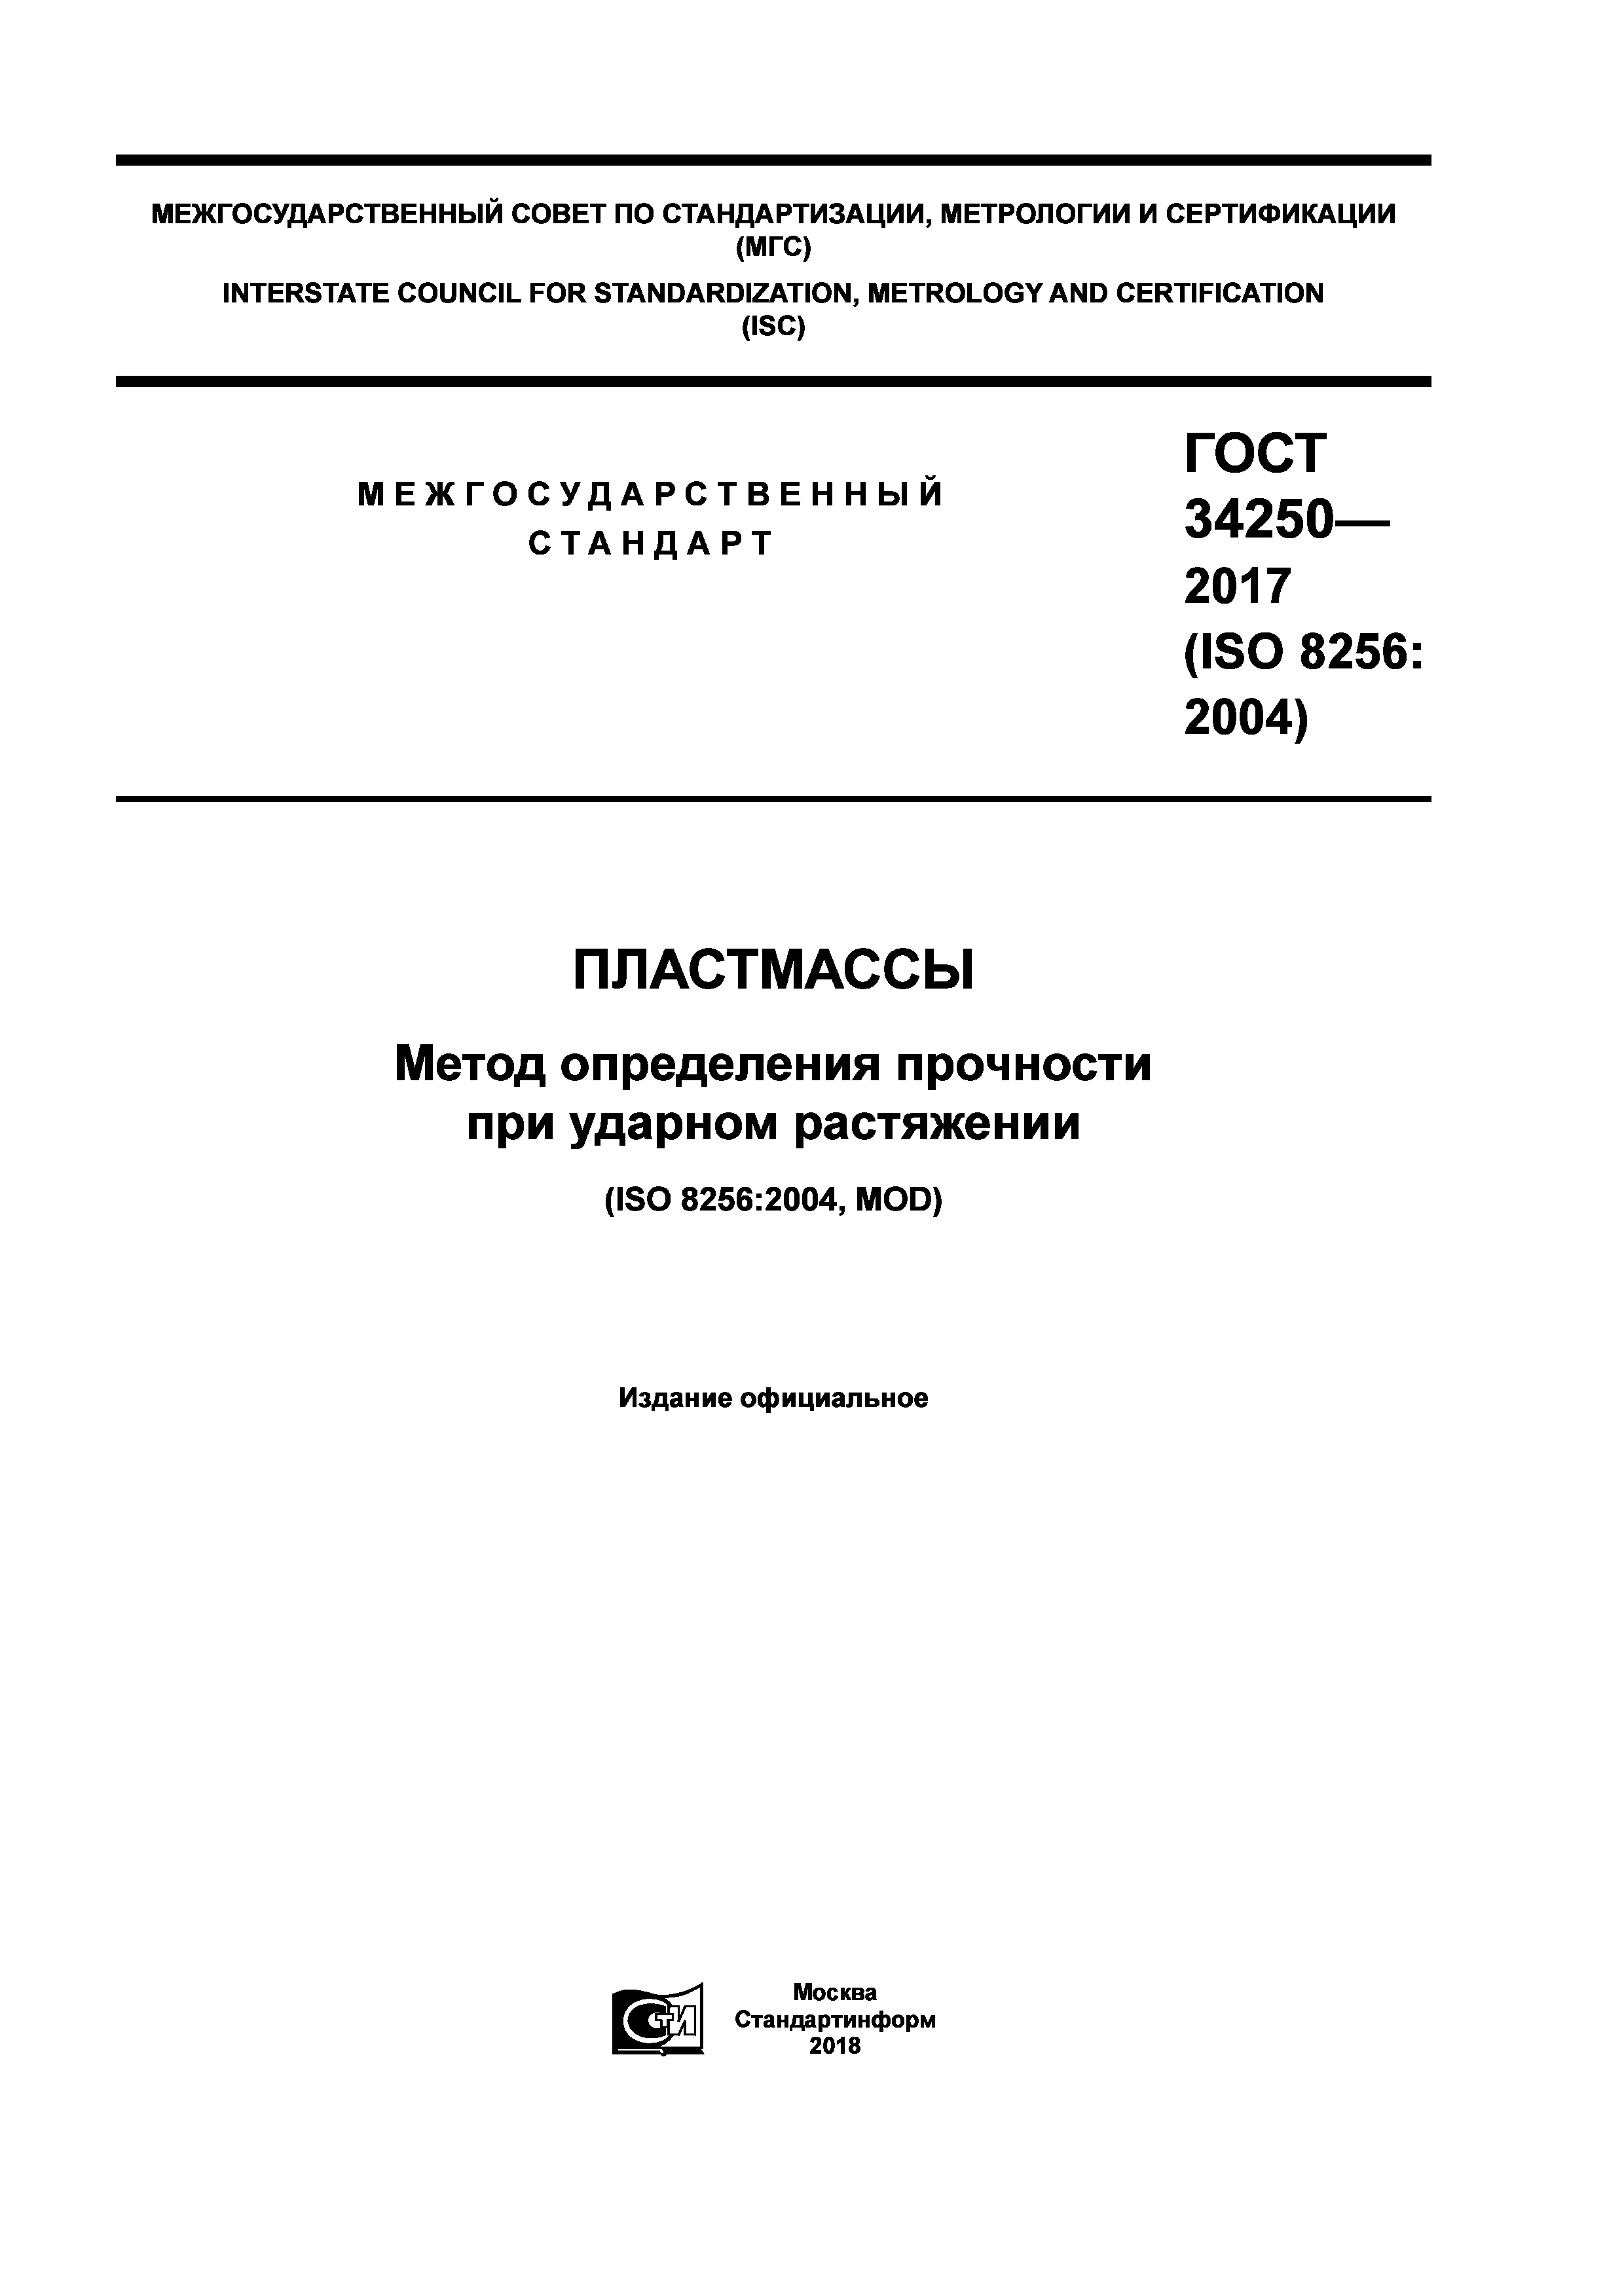 ГОСТ 34250-2017